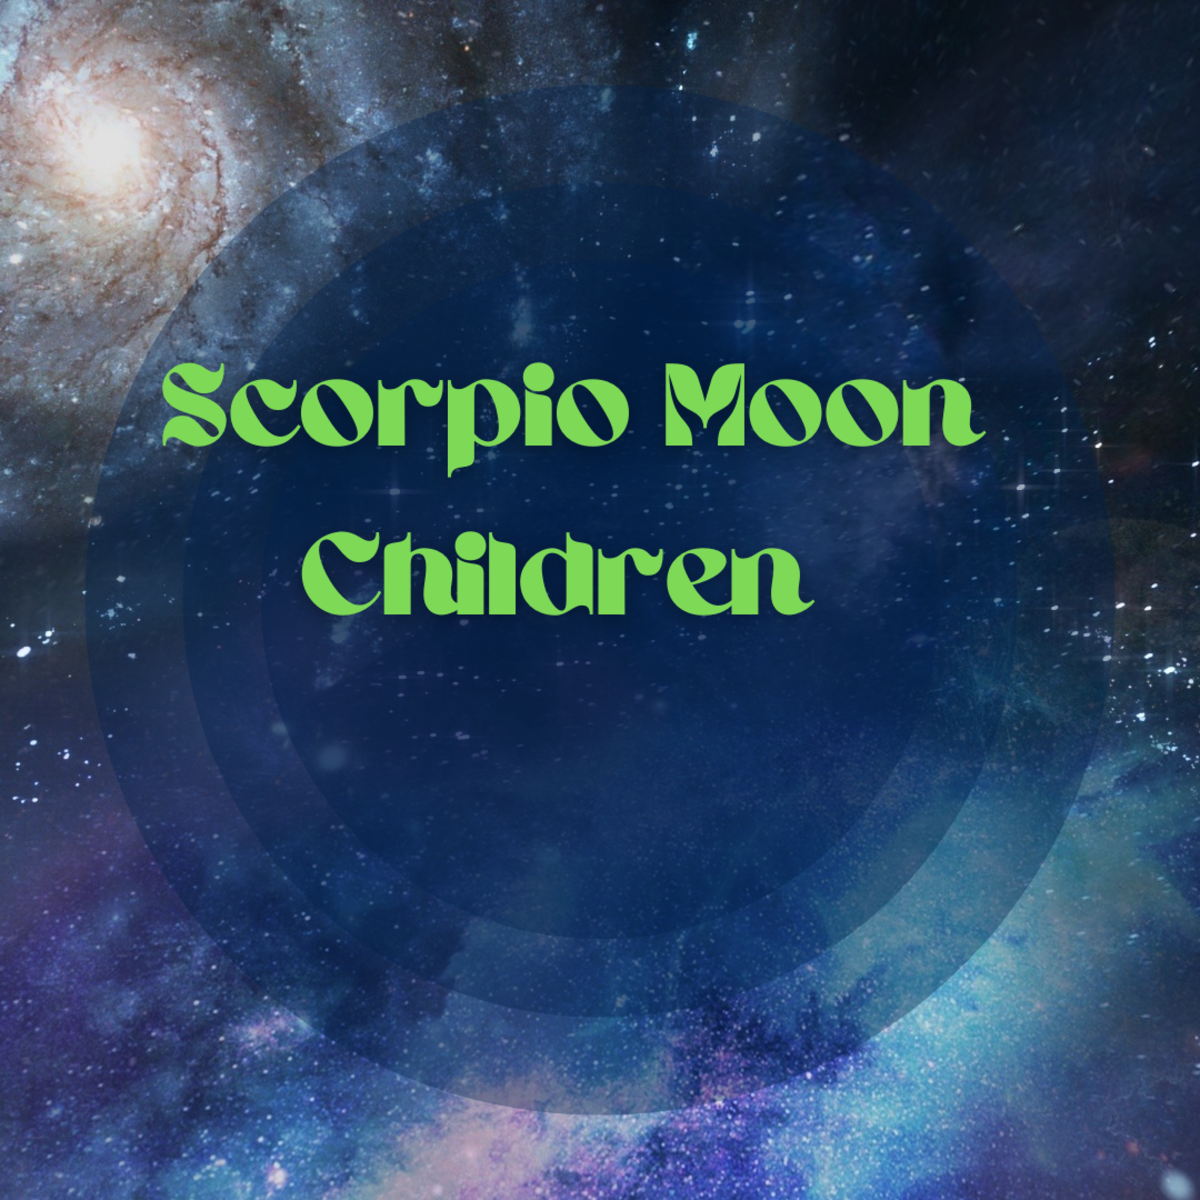 Scorpio Moon Children (The old soul)